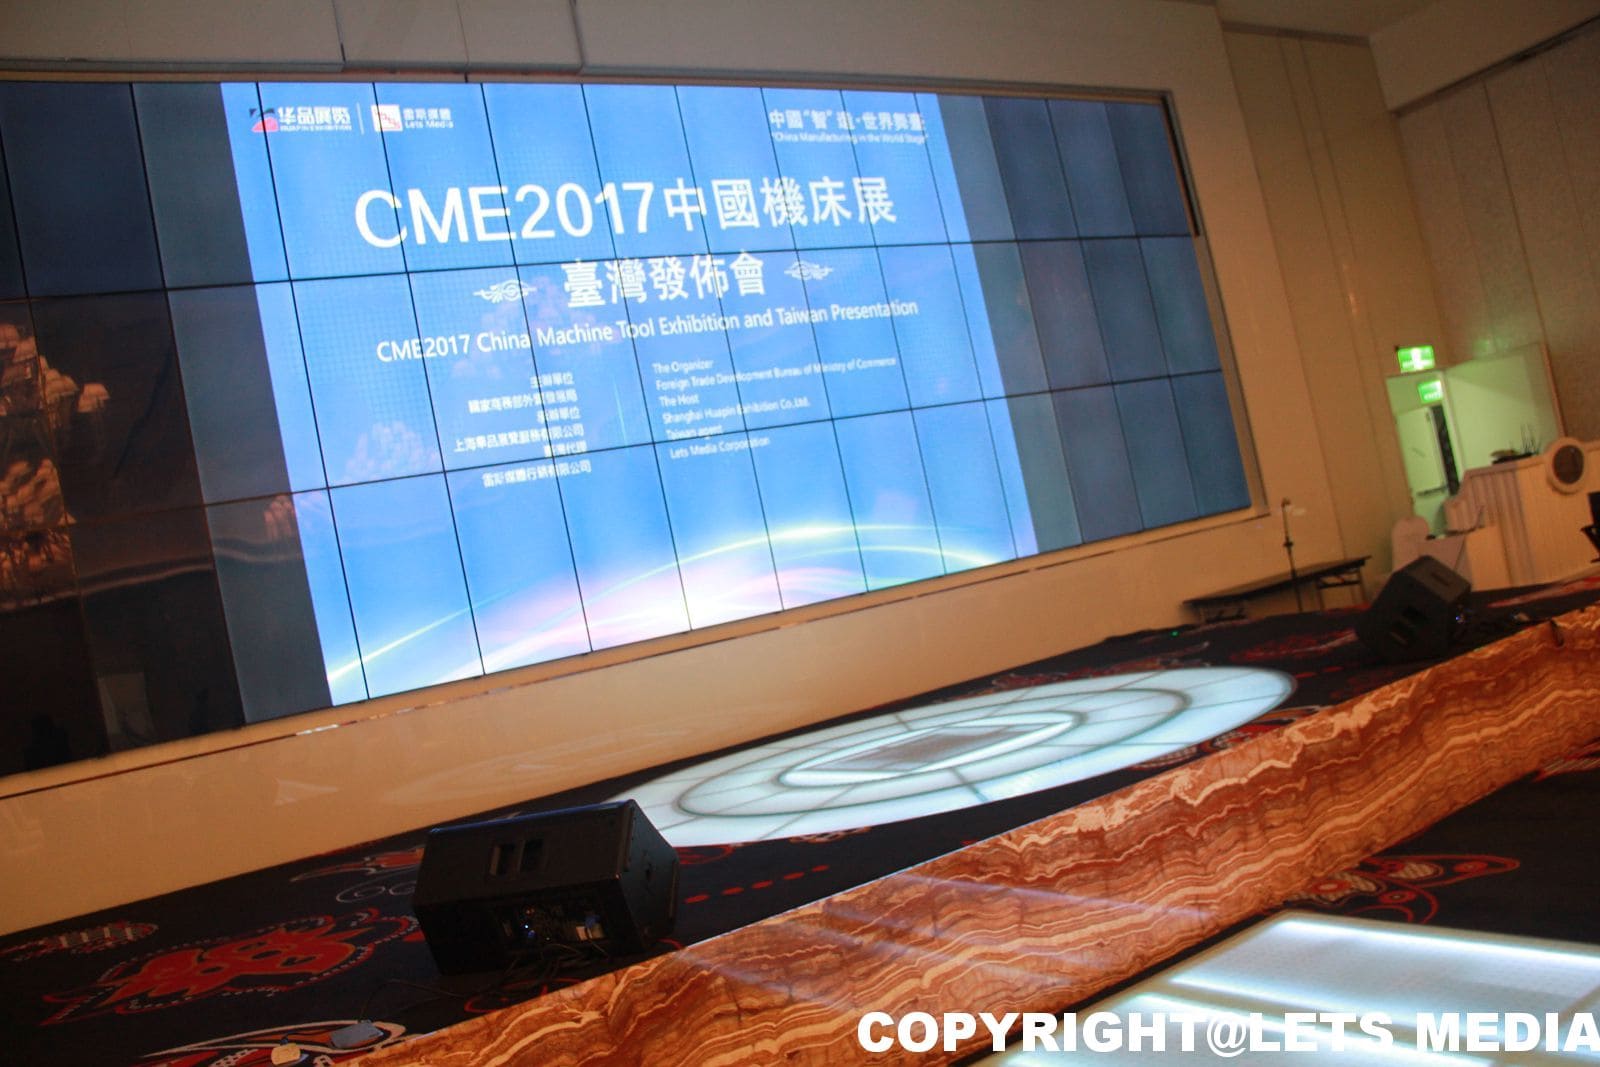 【CME 2017 中國機床展】發佈會暨聯合晚會 - 雷斯媒體正式代理